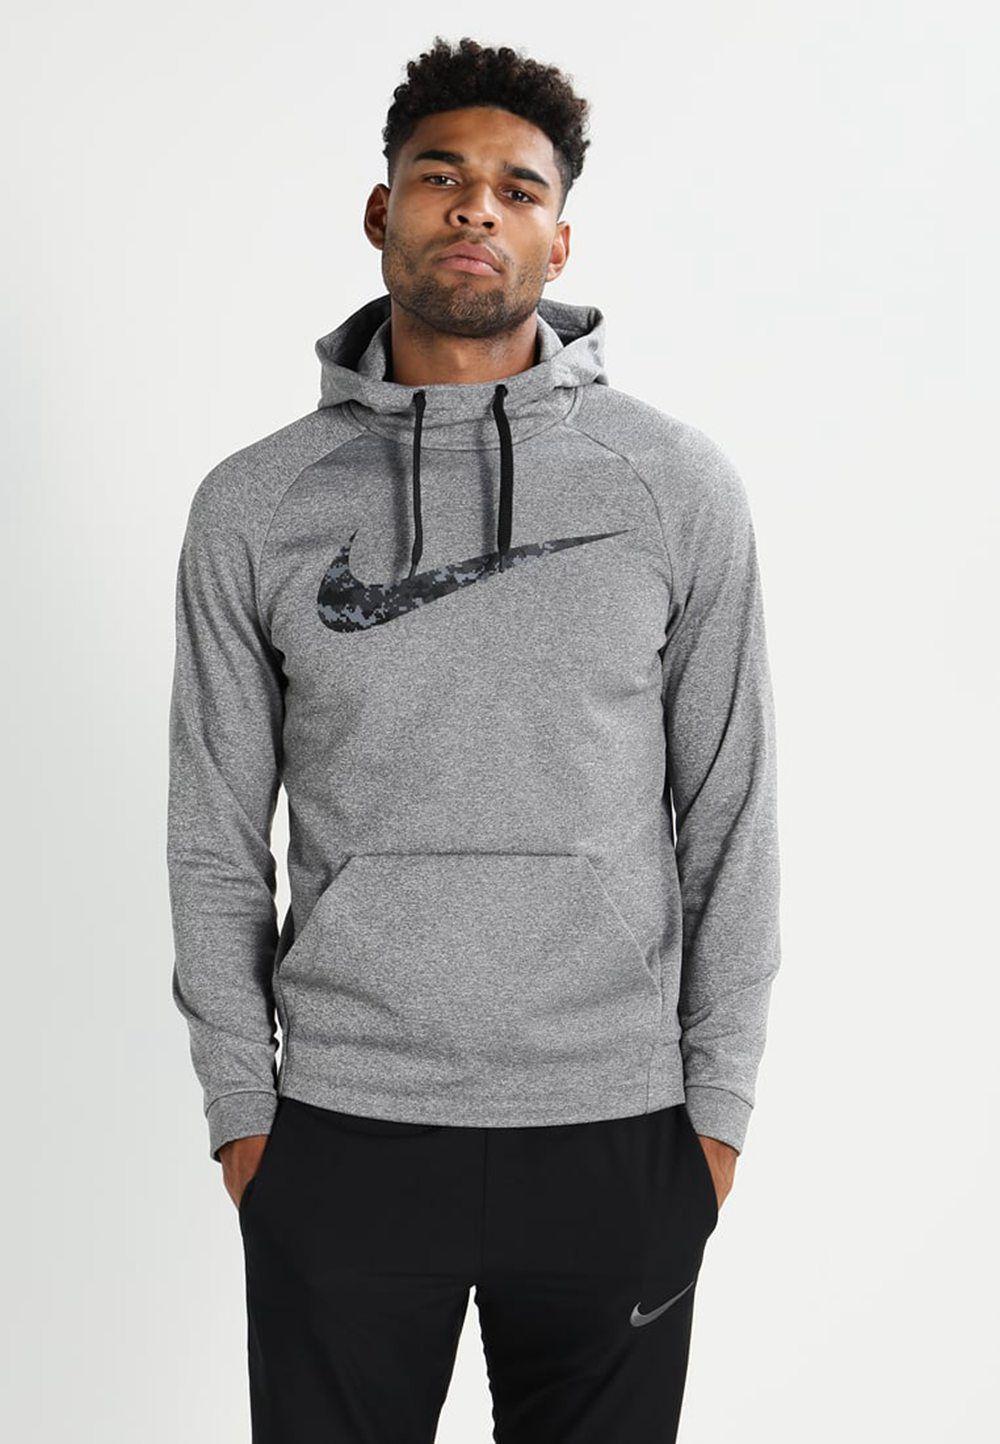 Nike Gray Camo Logo - Amazing Grey Nike Sweatshirt On Sale Therma Camo Logo Best